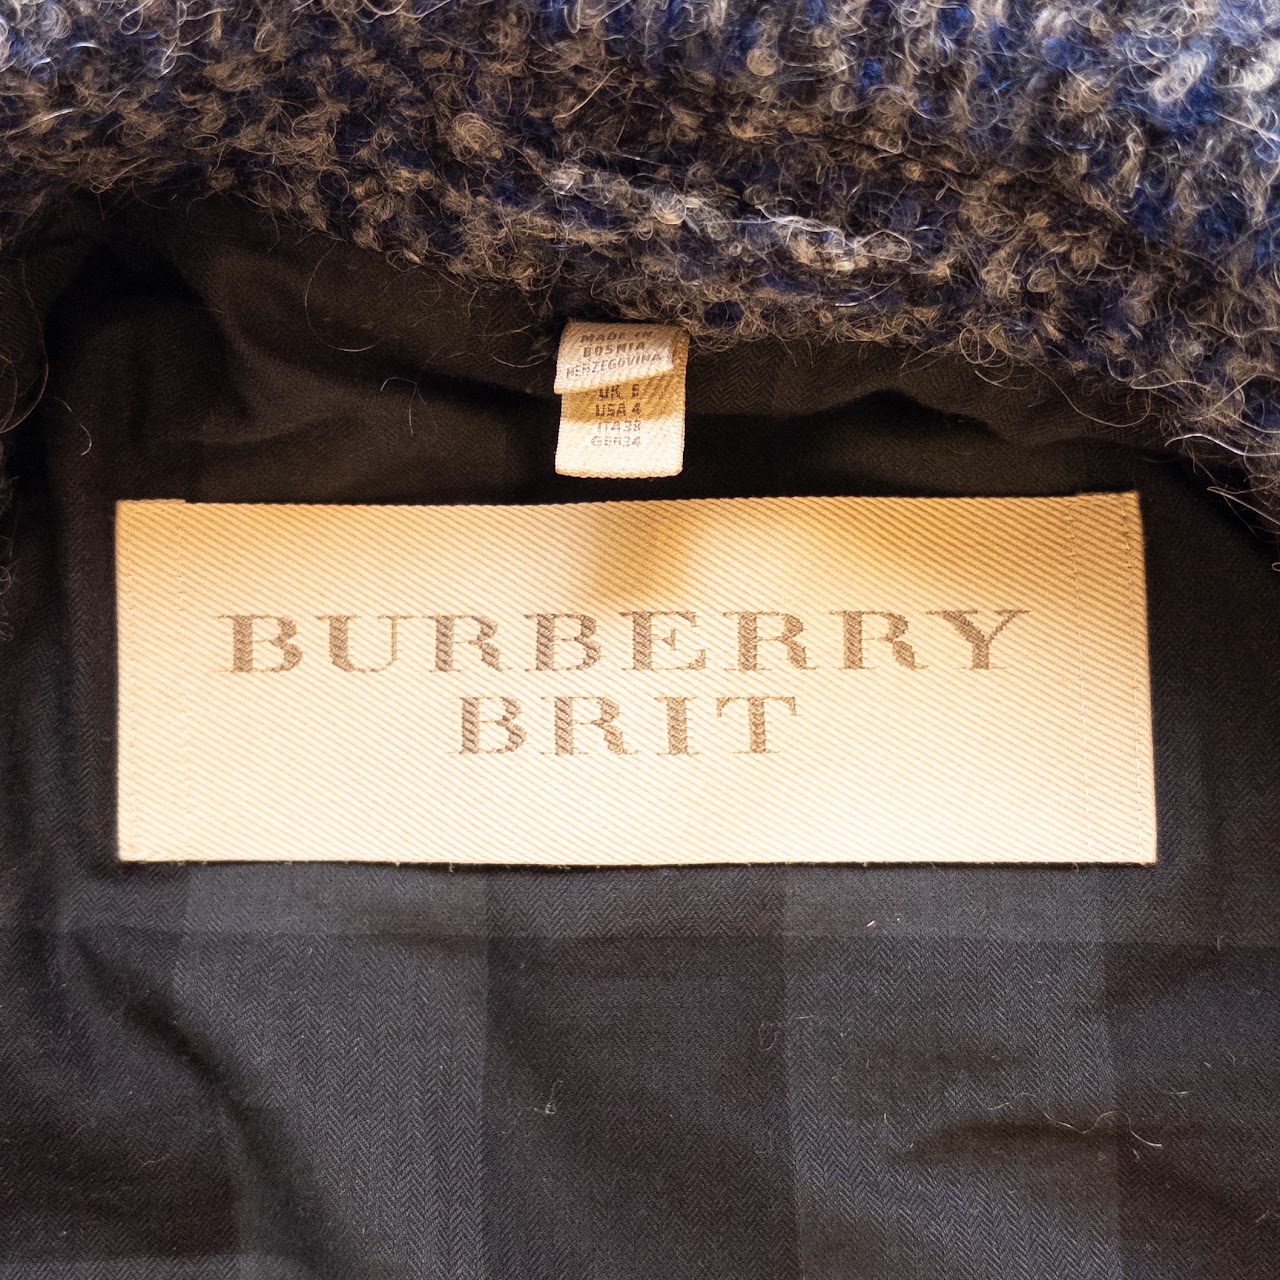 Burberry Brit Wool, Alpaca and Mohair Blend Tweed Overcoat